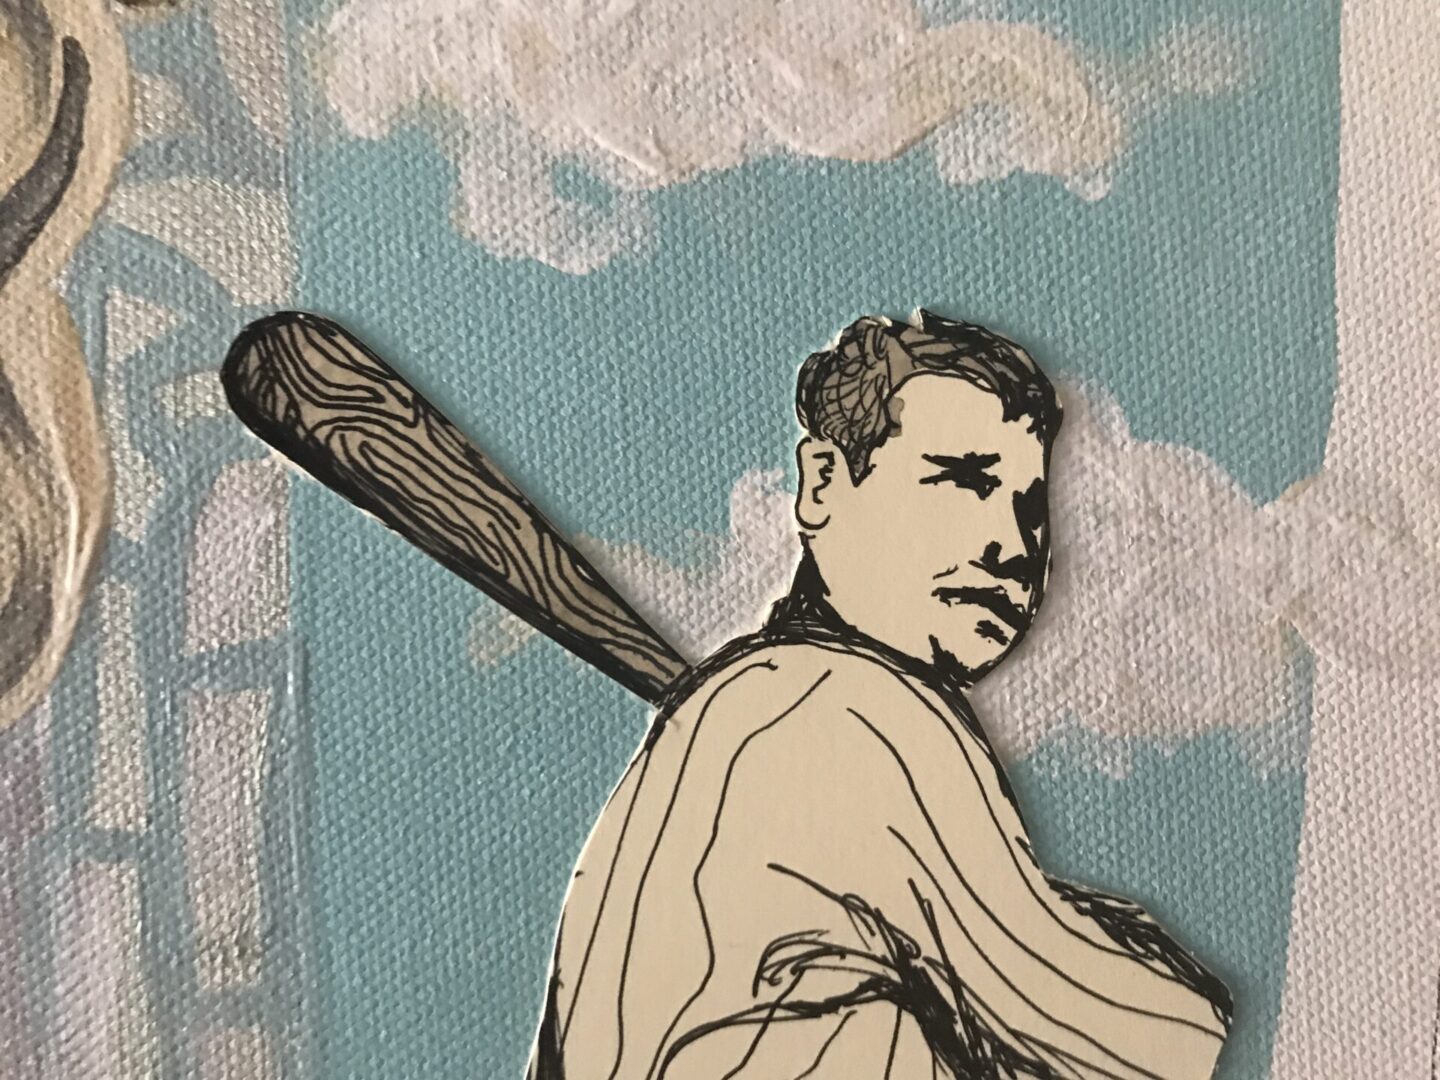 Sketch painting of a baseball batsman